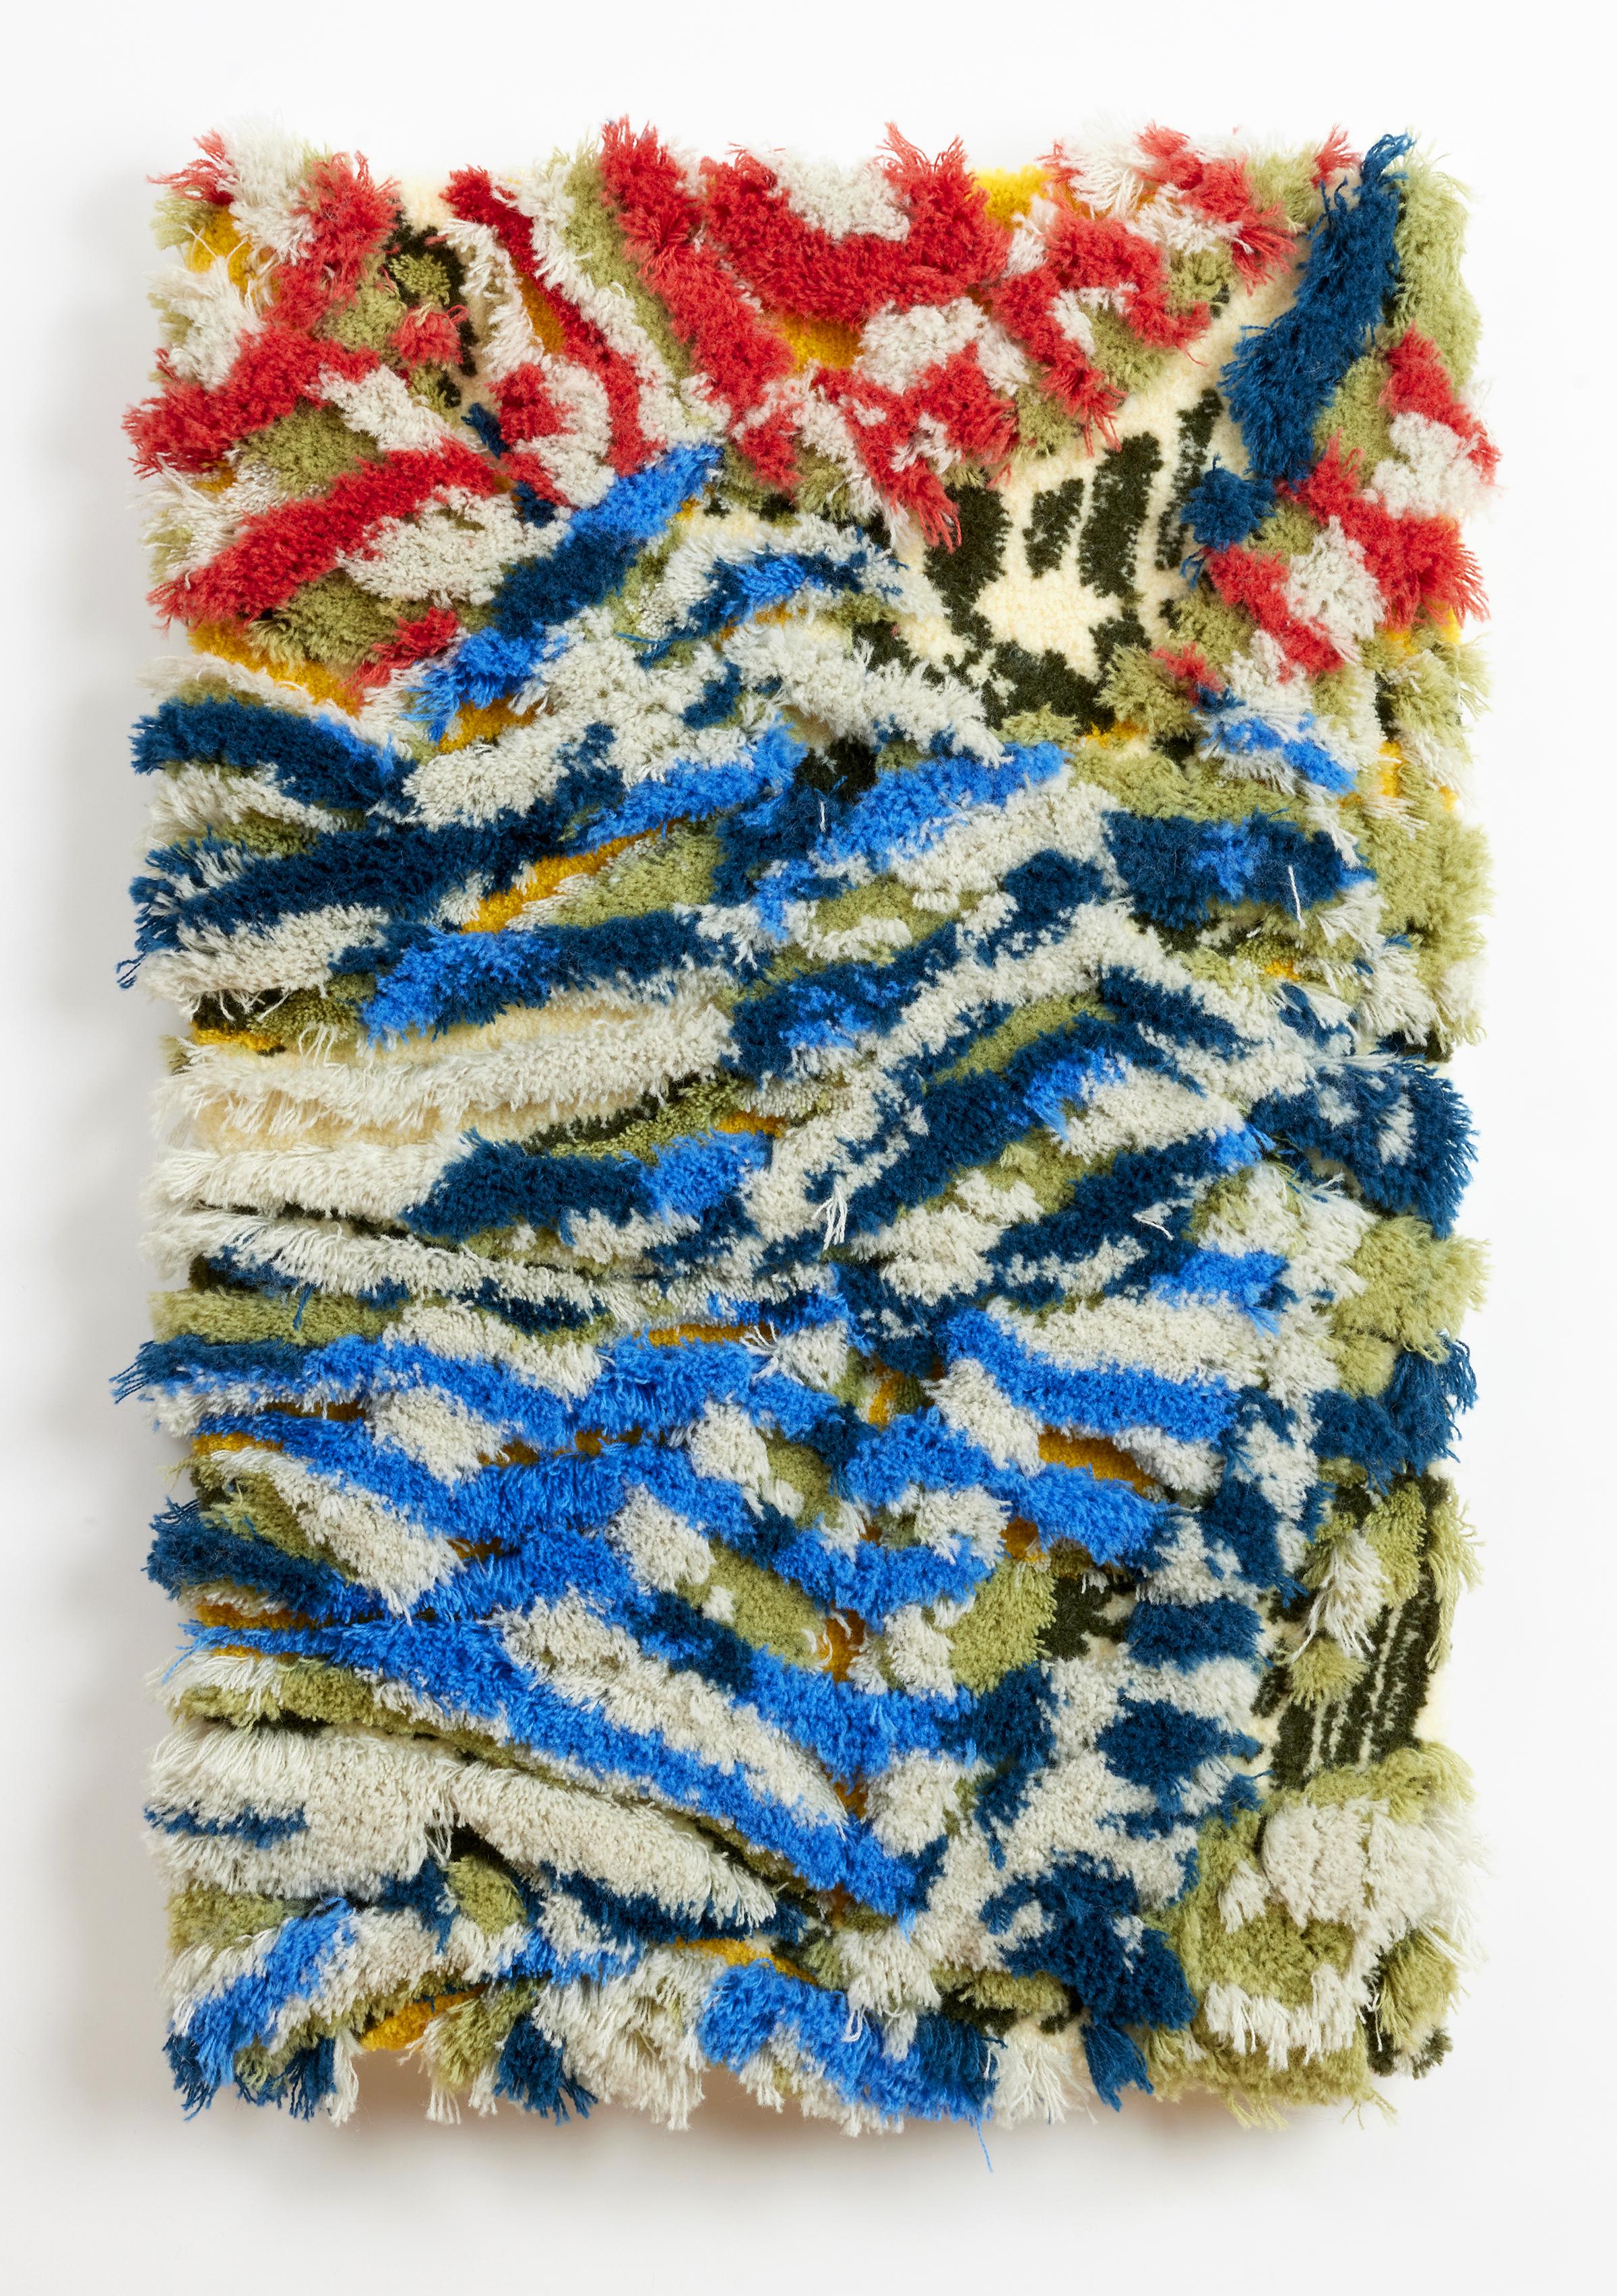 'Bold Fold' - contemporary fiber art, texture, pattern, stripes, tufting - Mixed Media Art by Trish Andersen